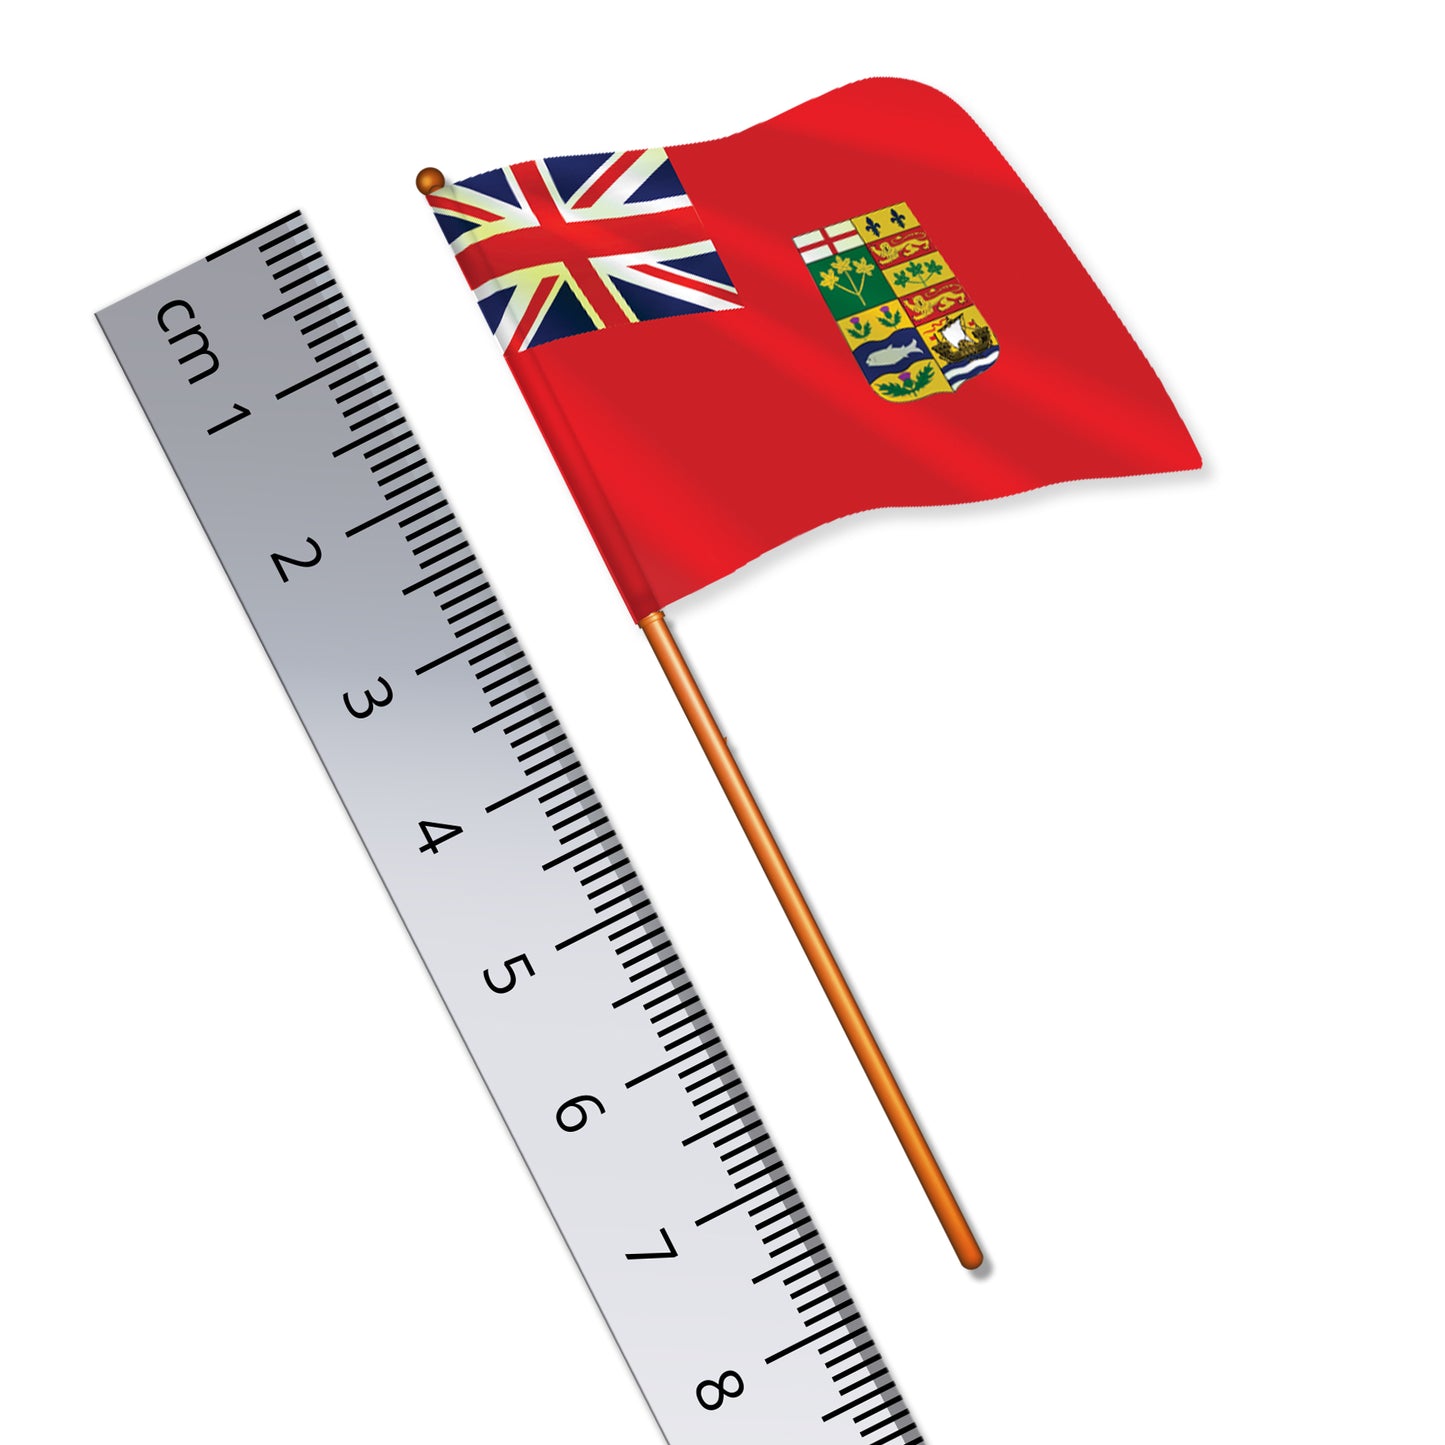 Canada Red Ensign Flag (British Empire, World War I)